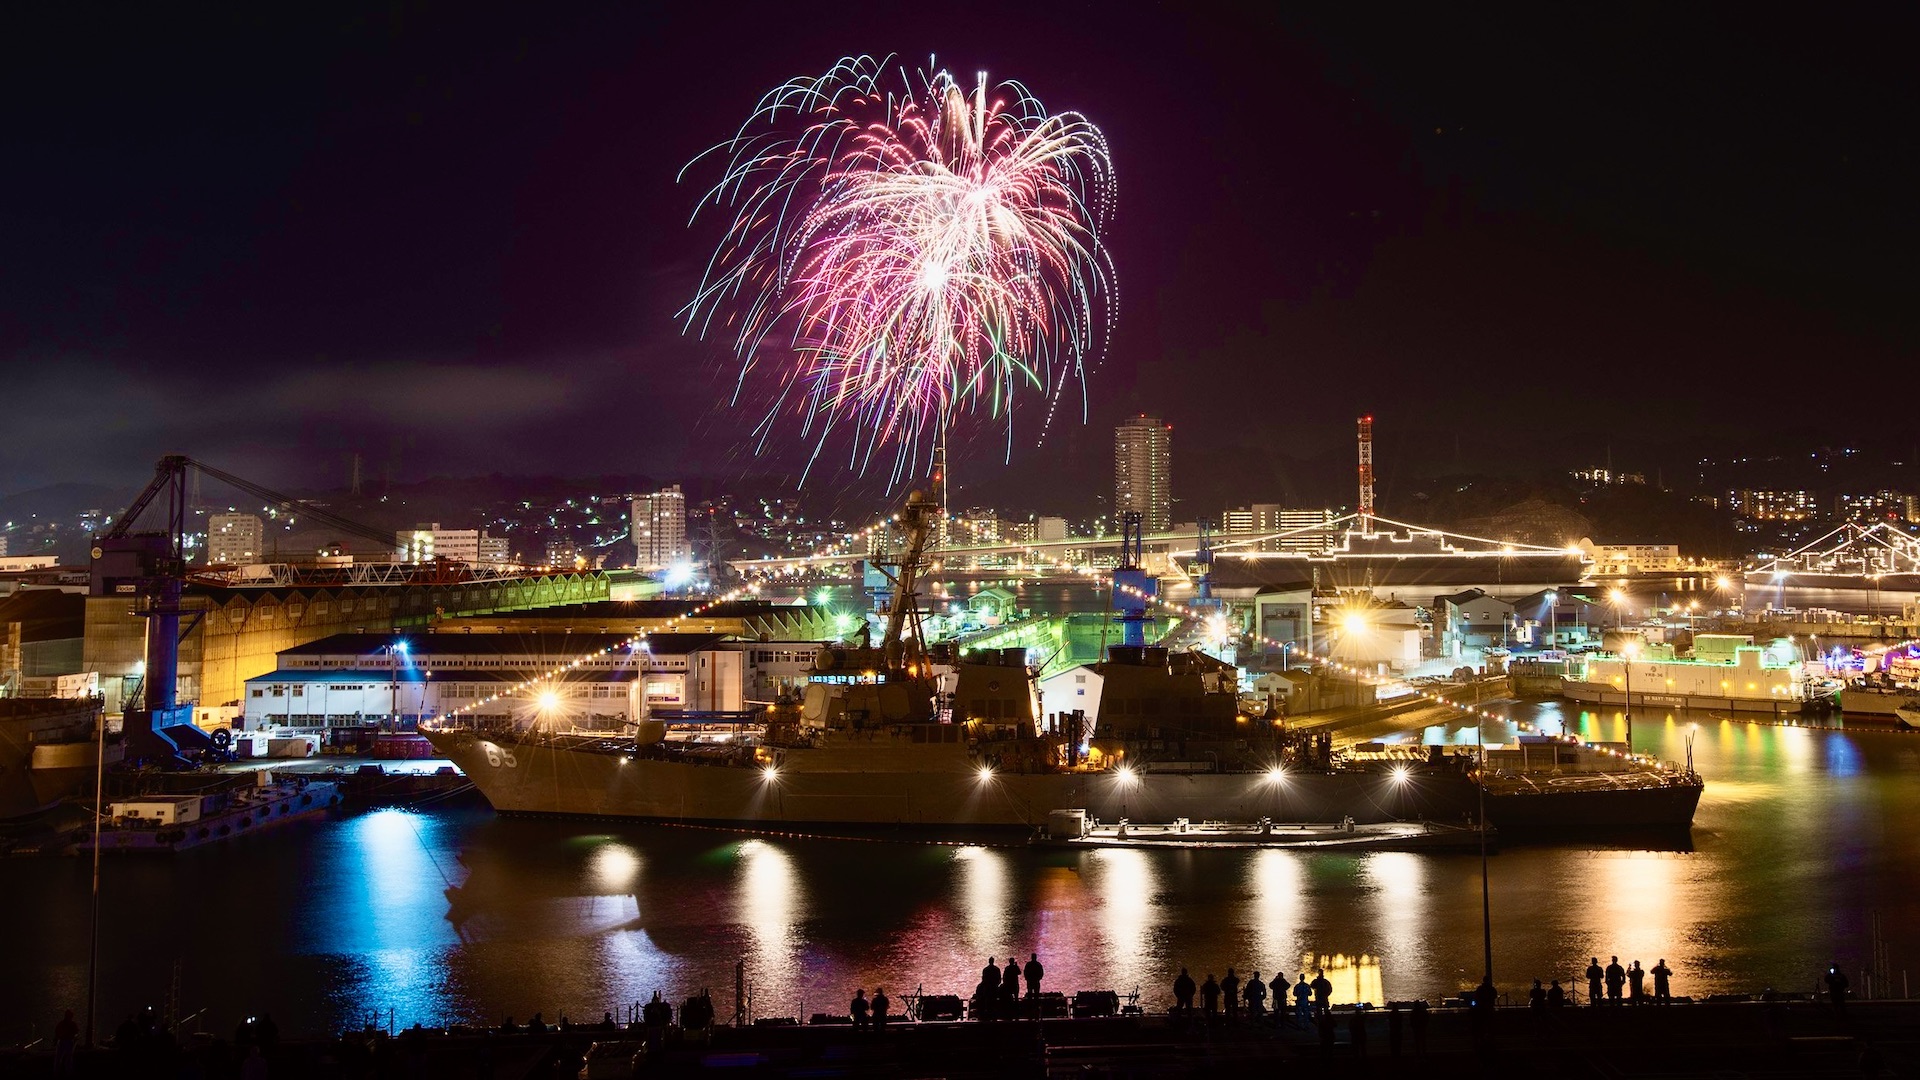 Sailors observe fireworks behind the Arleigh Burke class destroyer USS Benfold on New Year's Eve 2015, Yokosuka, Japan.